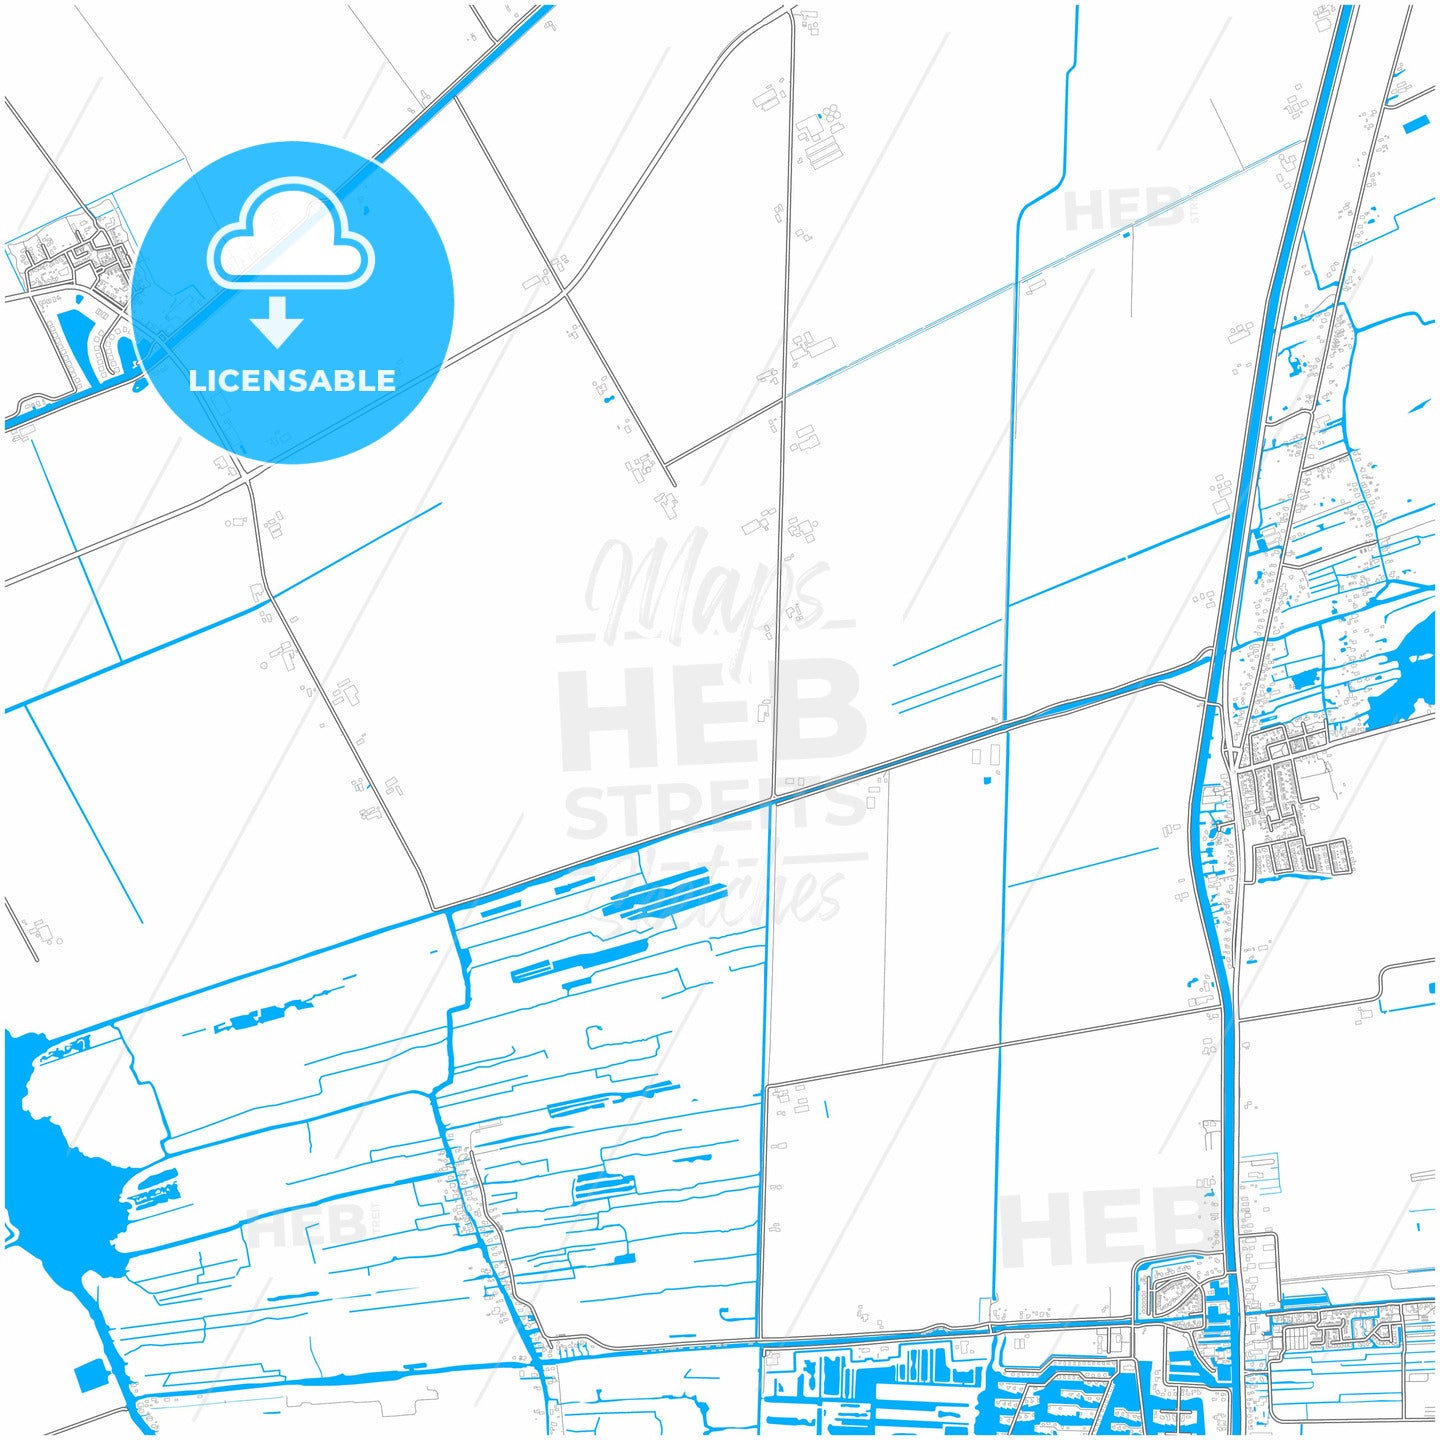 Steenwijkerland, Overijssel, Netherlands, city map with high quality roads.